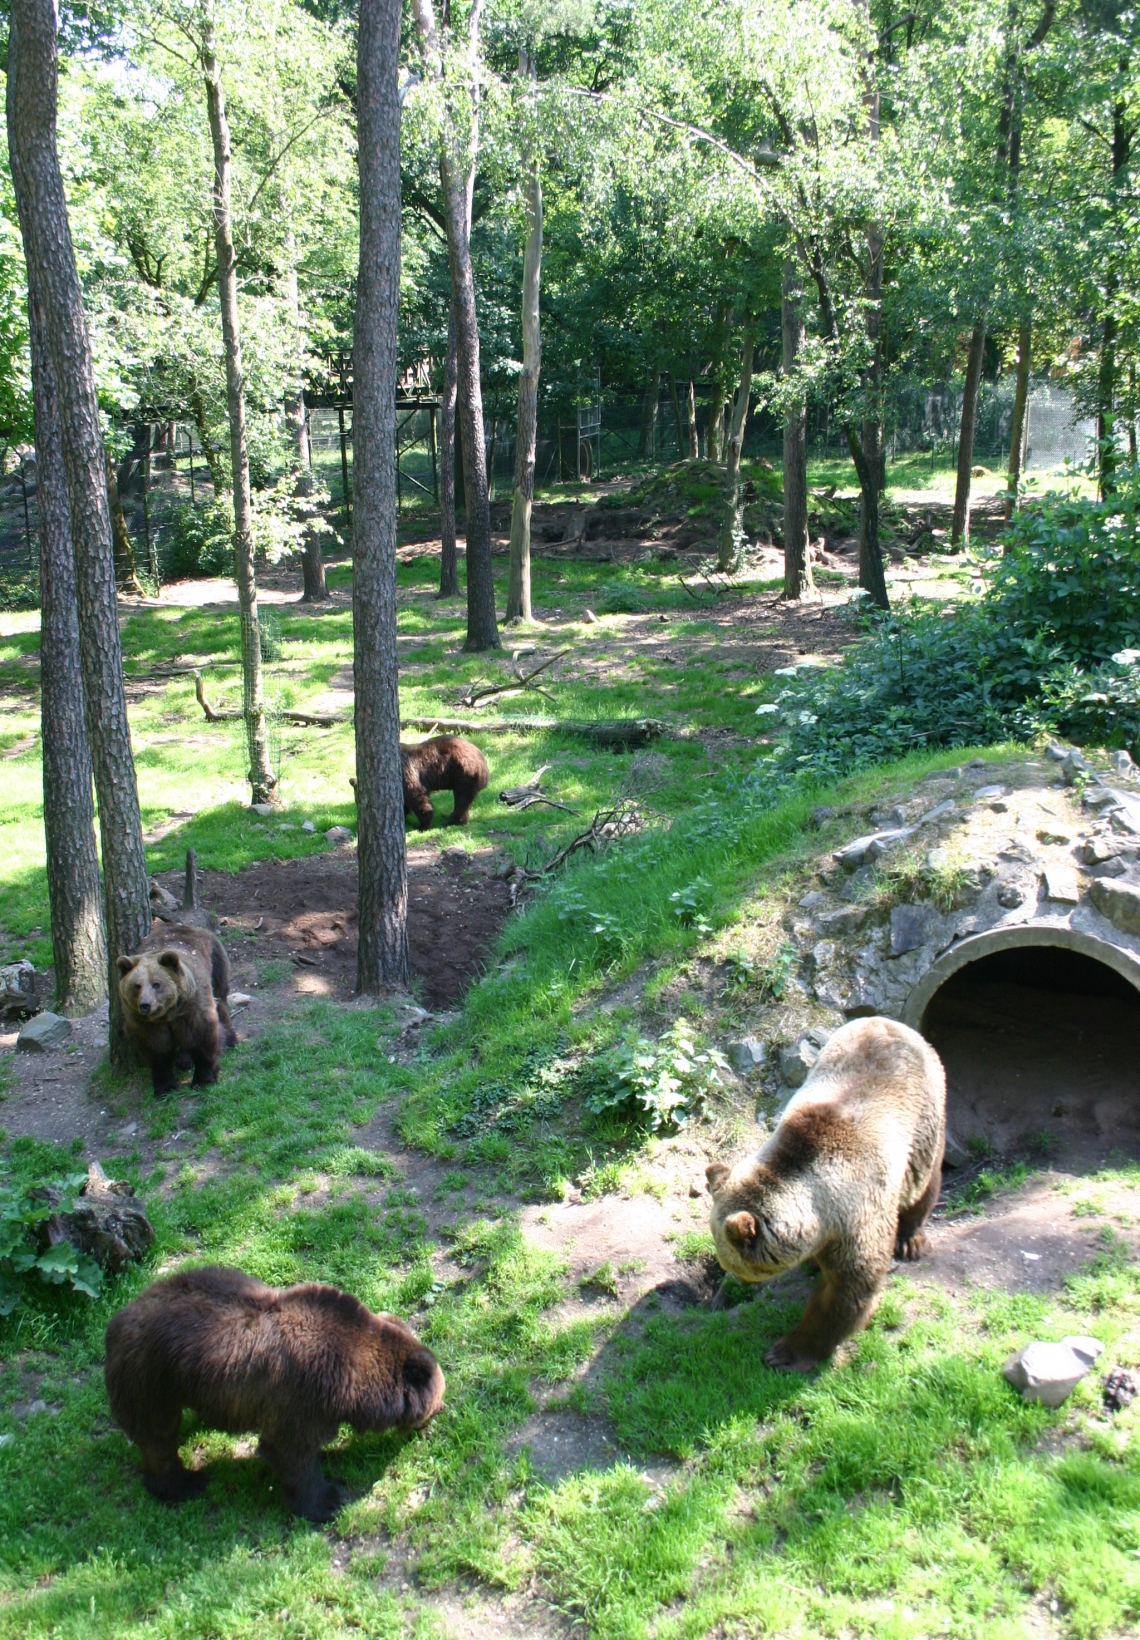 Brown bear_U arctos_large natural exhibit Ouwehand zoo Rhenen Netherlands_©BEARSinMIND